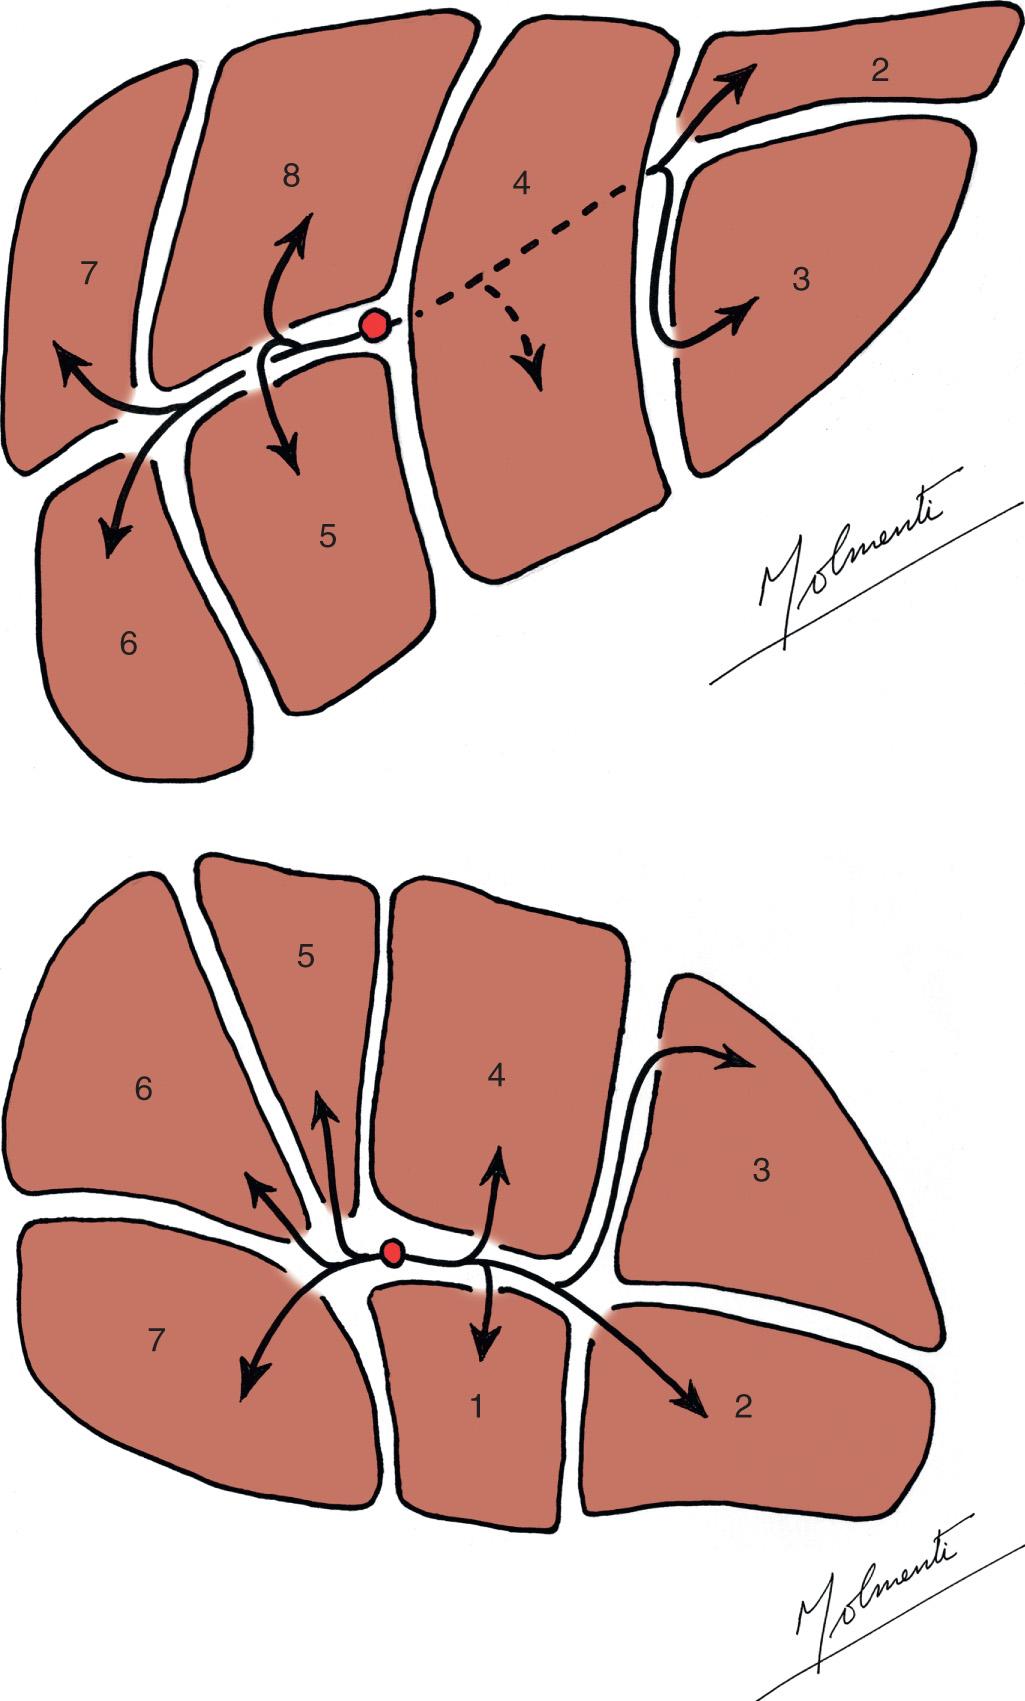 FIGURE 118.3, Schematic representation of the arteriobiliary liver anatomy.